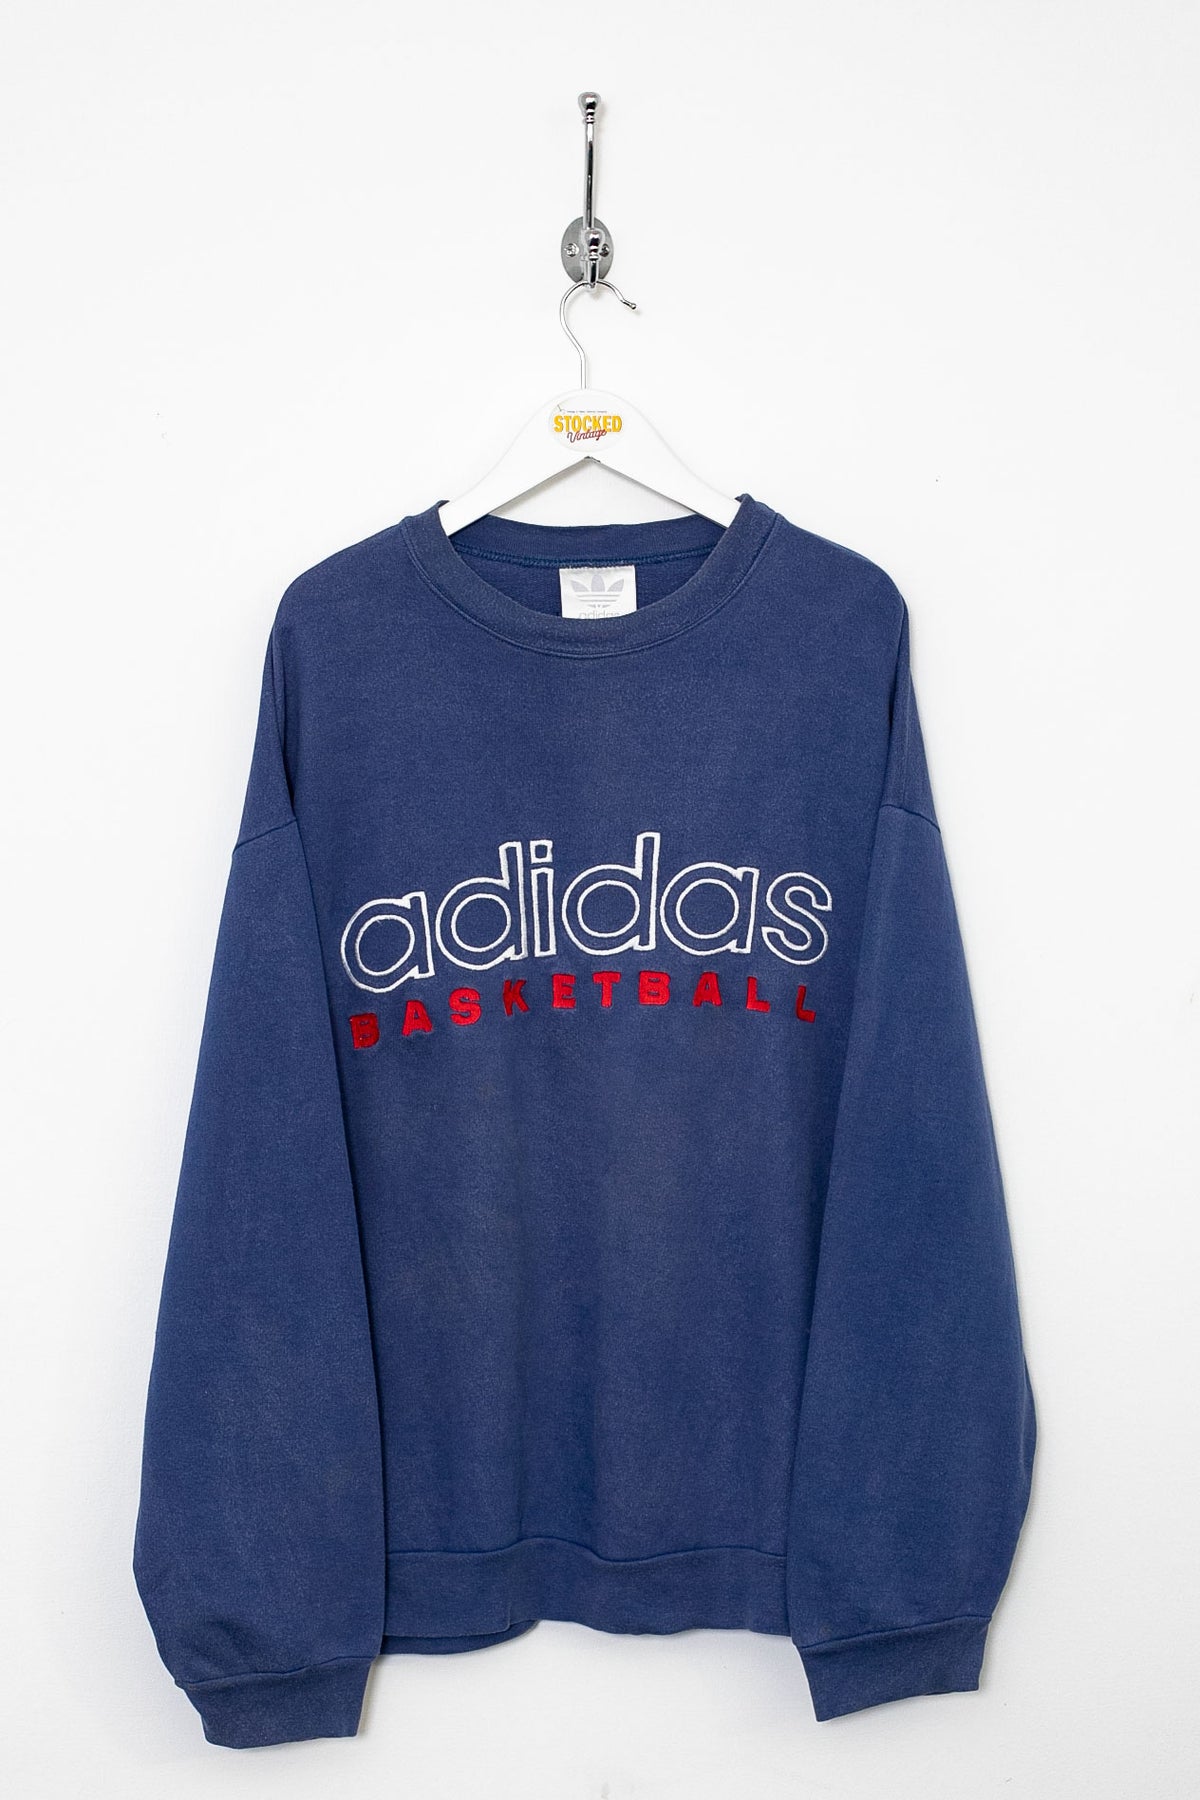 90s Adidas Basketball Sweatshirt (L)